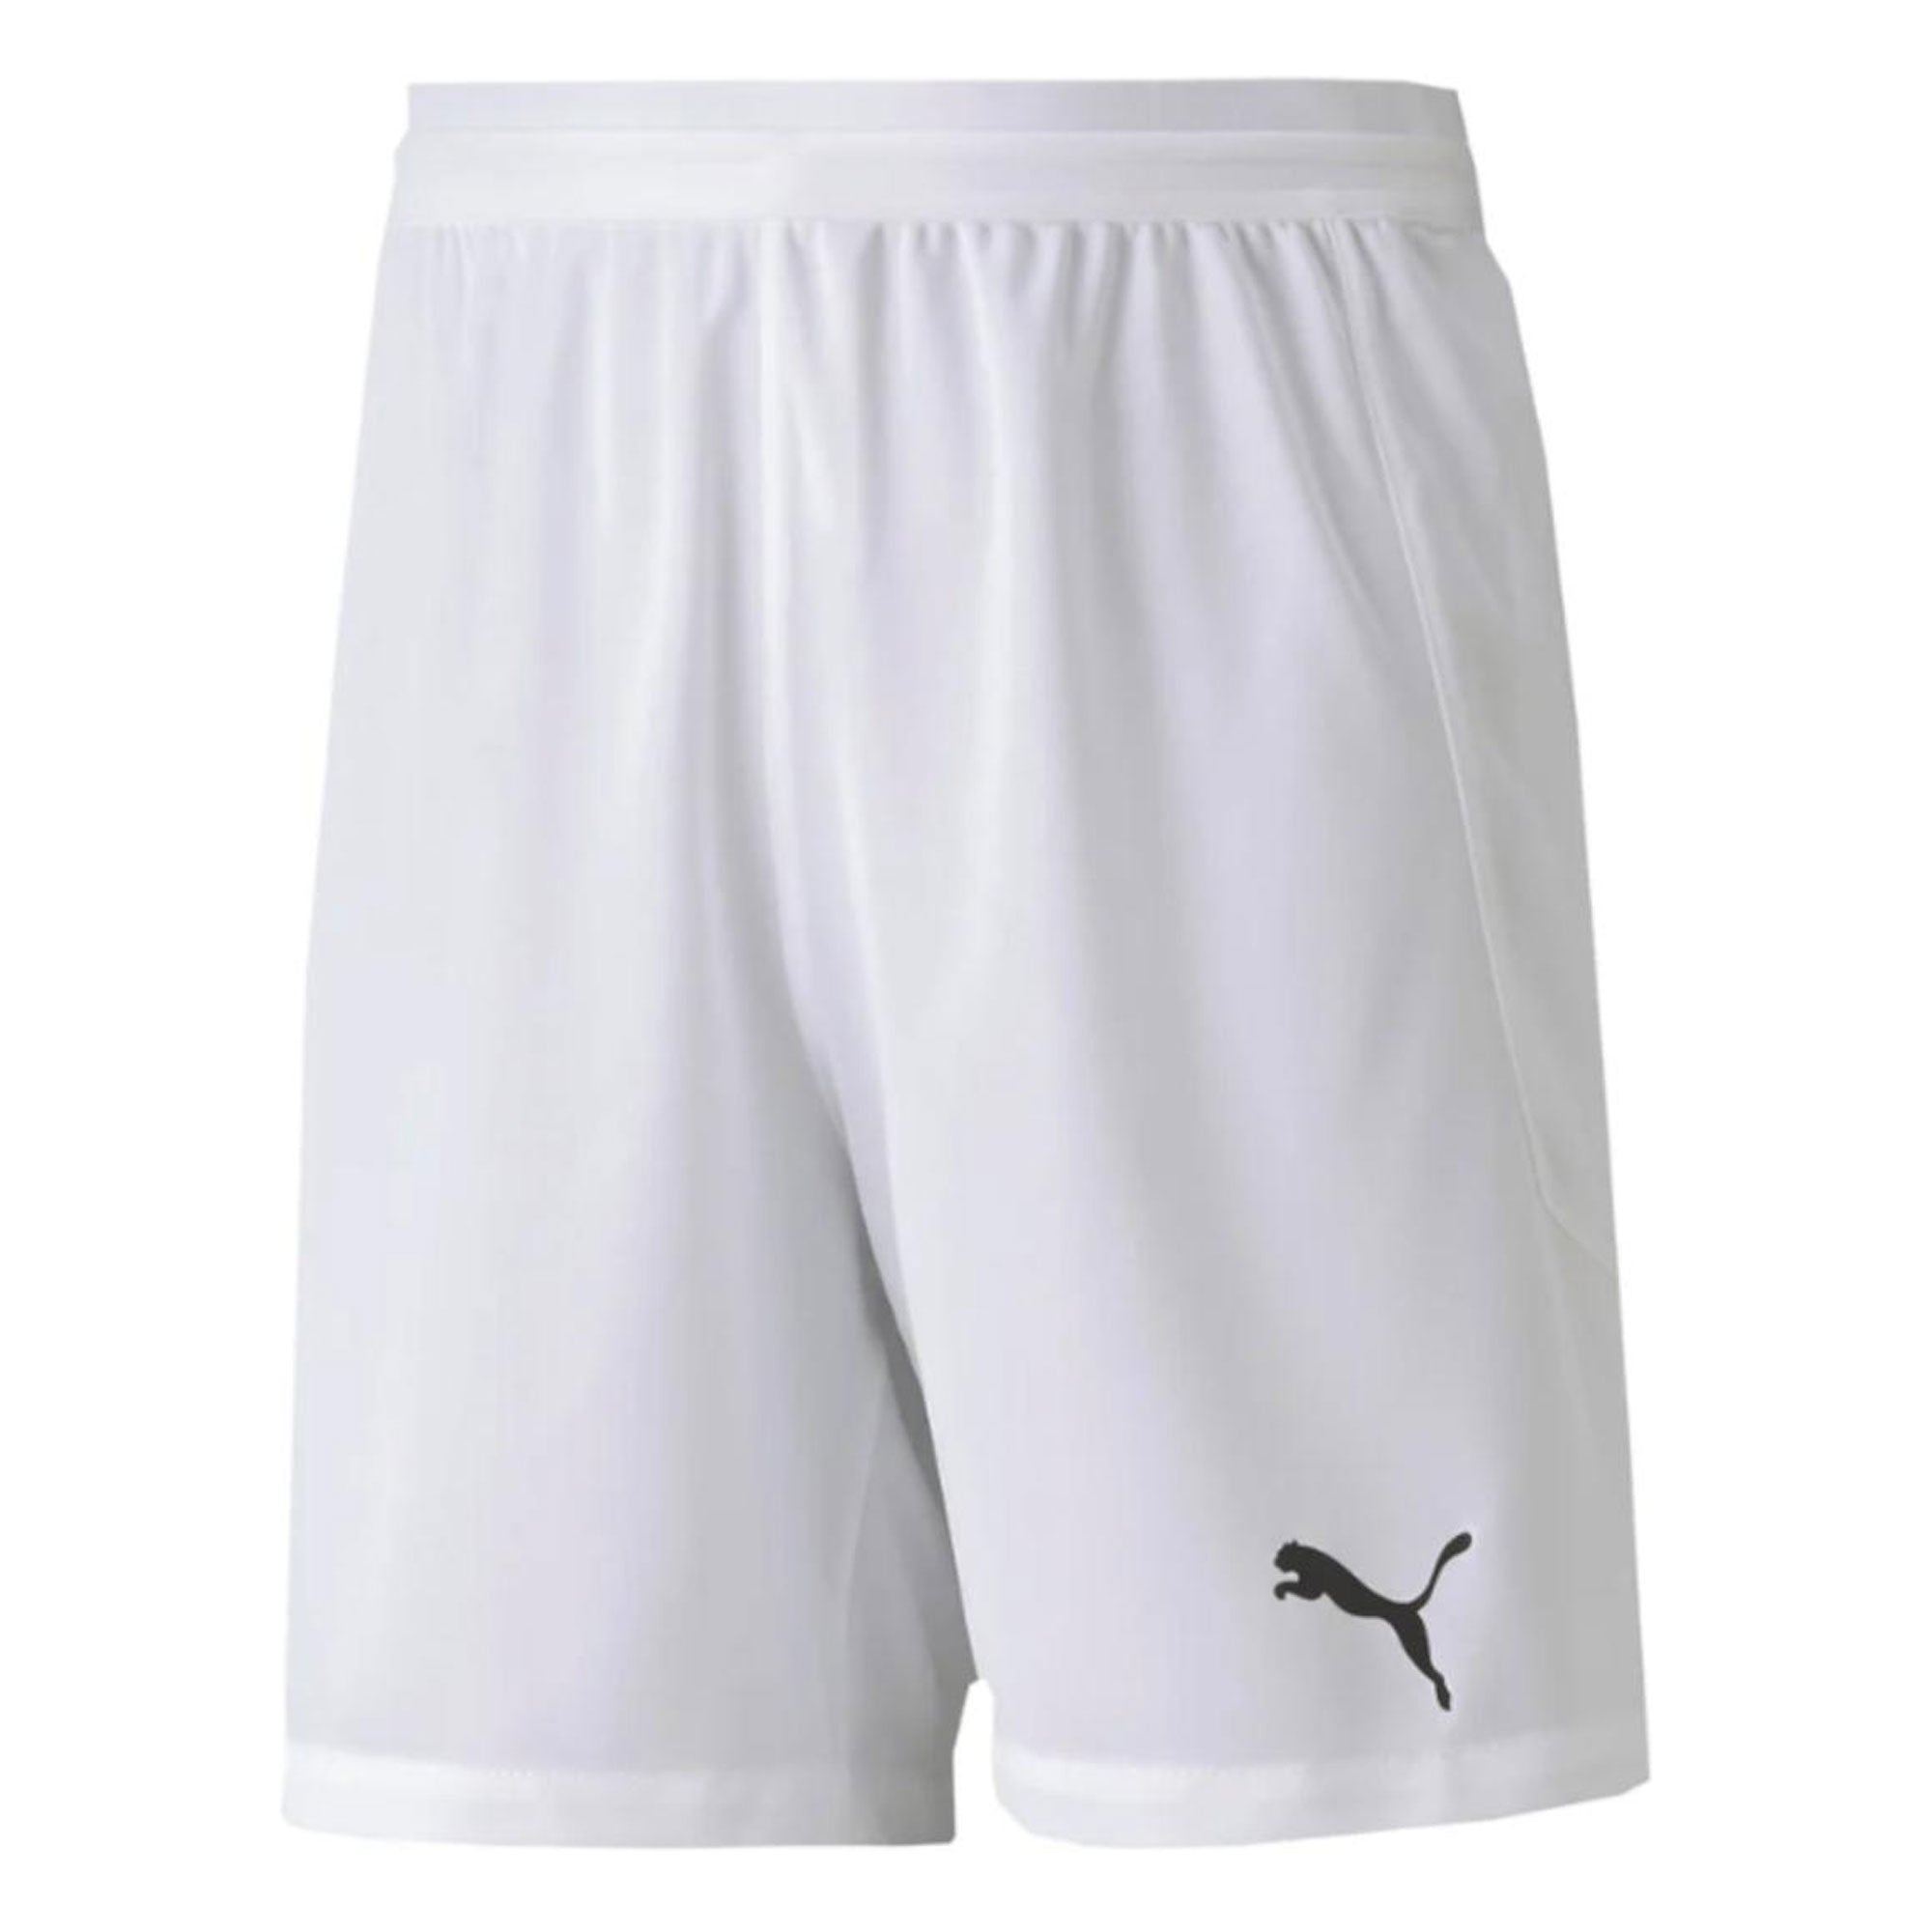 Nike Men's Pro Combat Tights Shorts White/Grey – Azteca Soccer